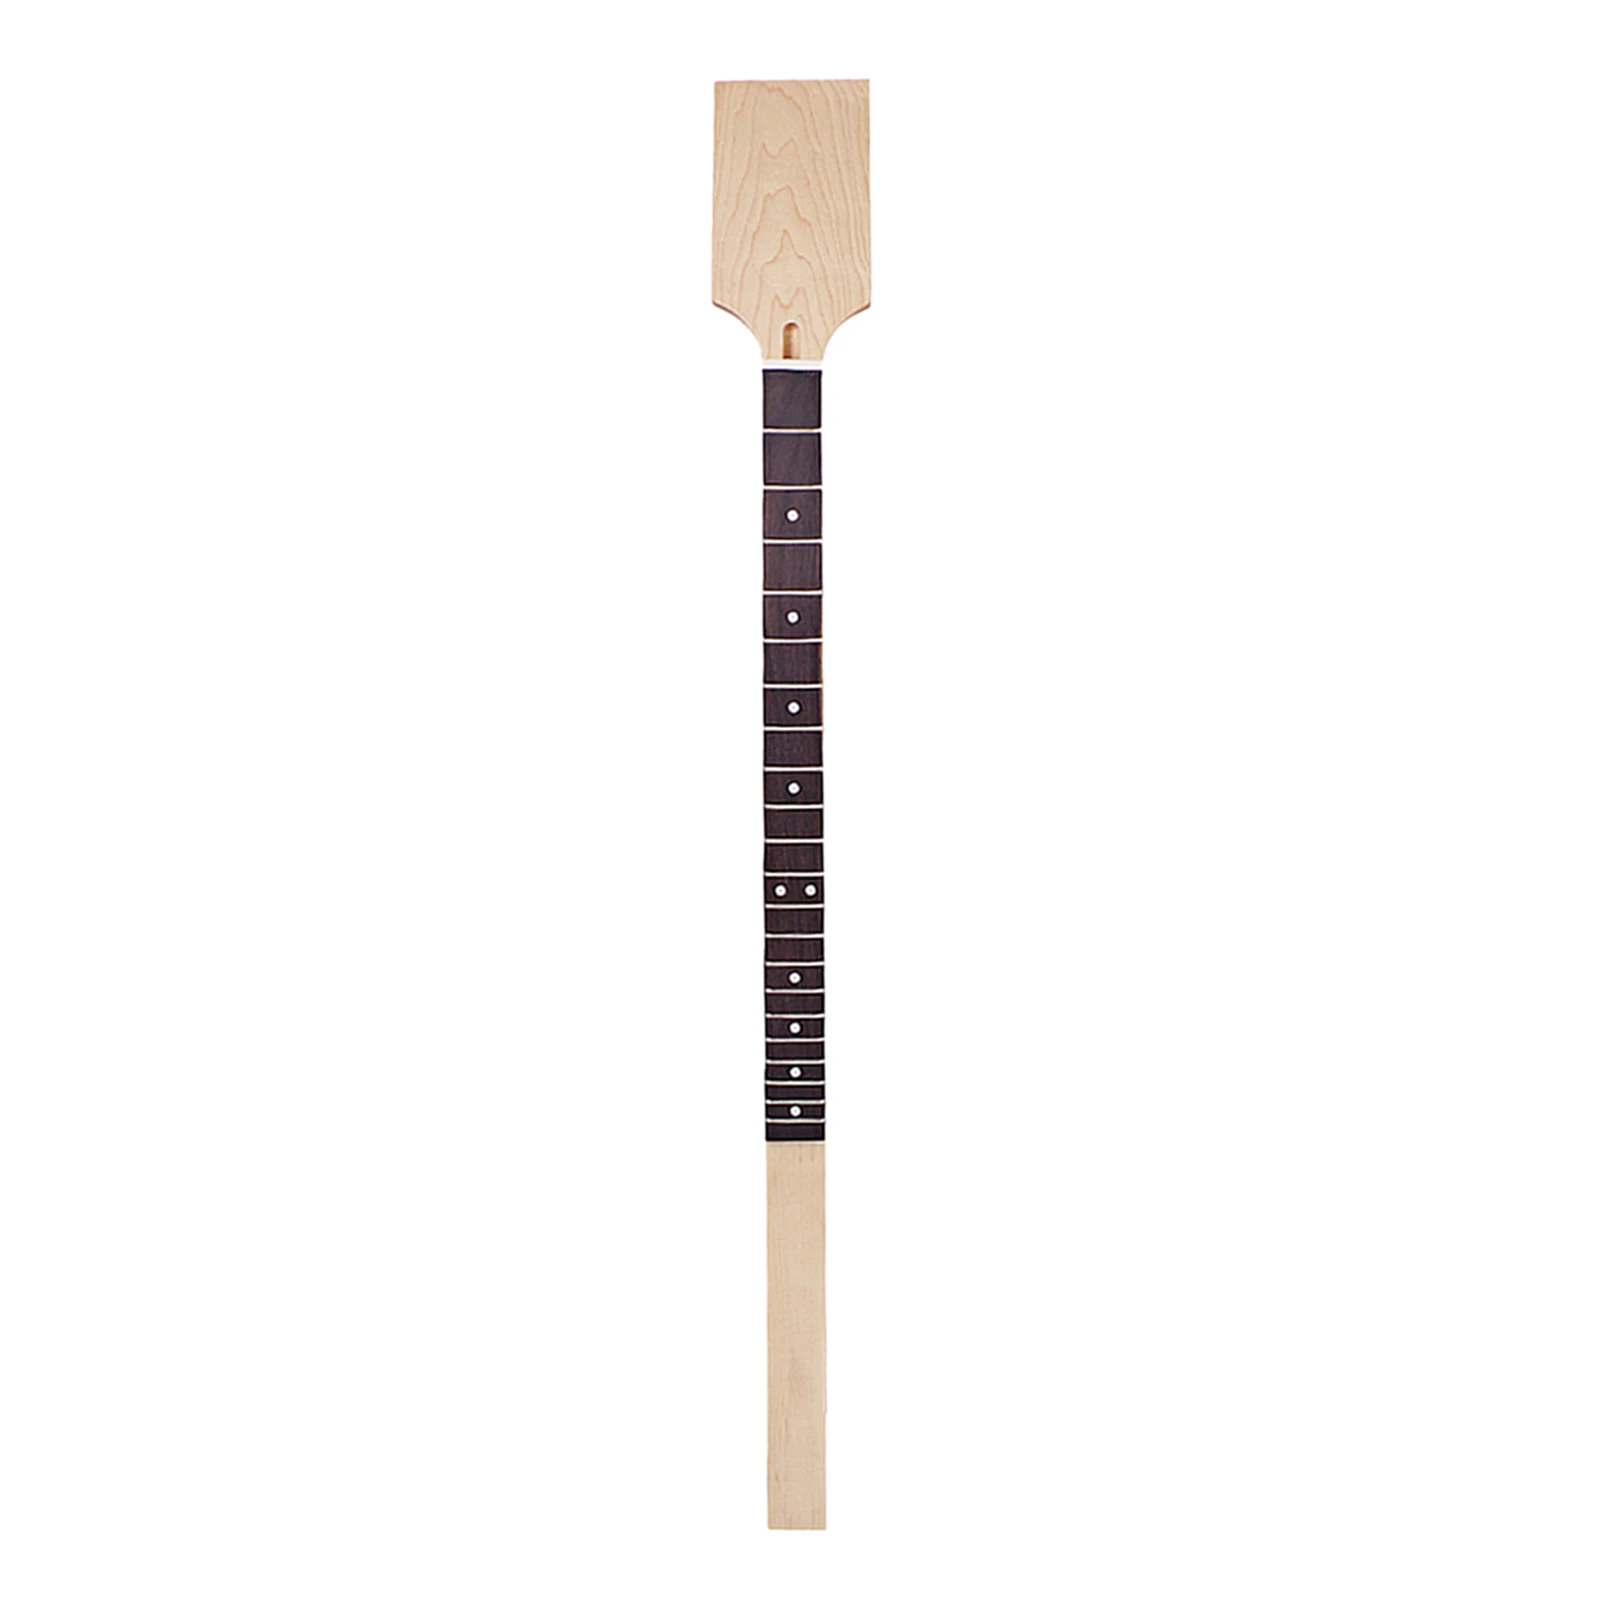 Wooden DIY 22 Frets Guitar Neck Electric Guitar Neck Paddle Head Maple Parts